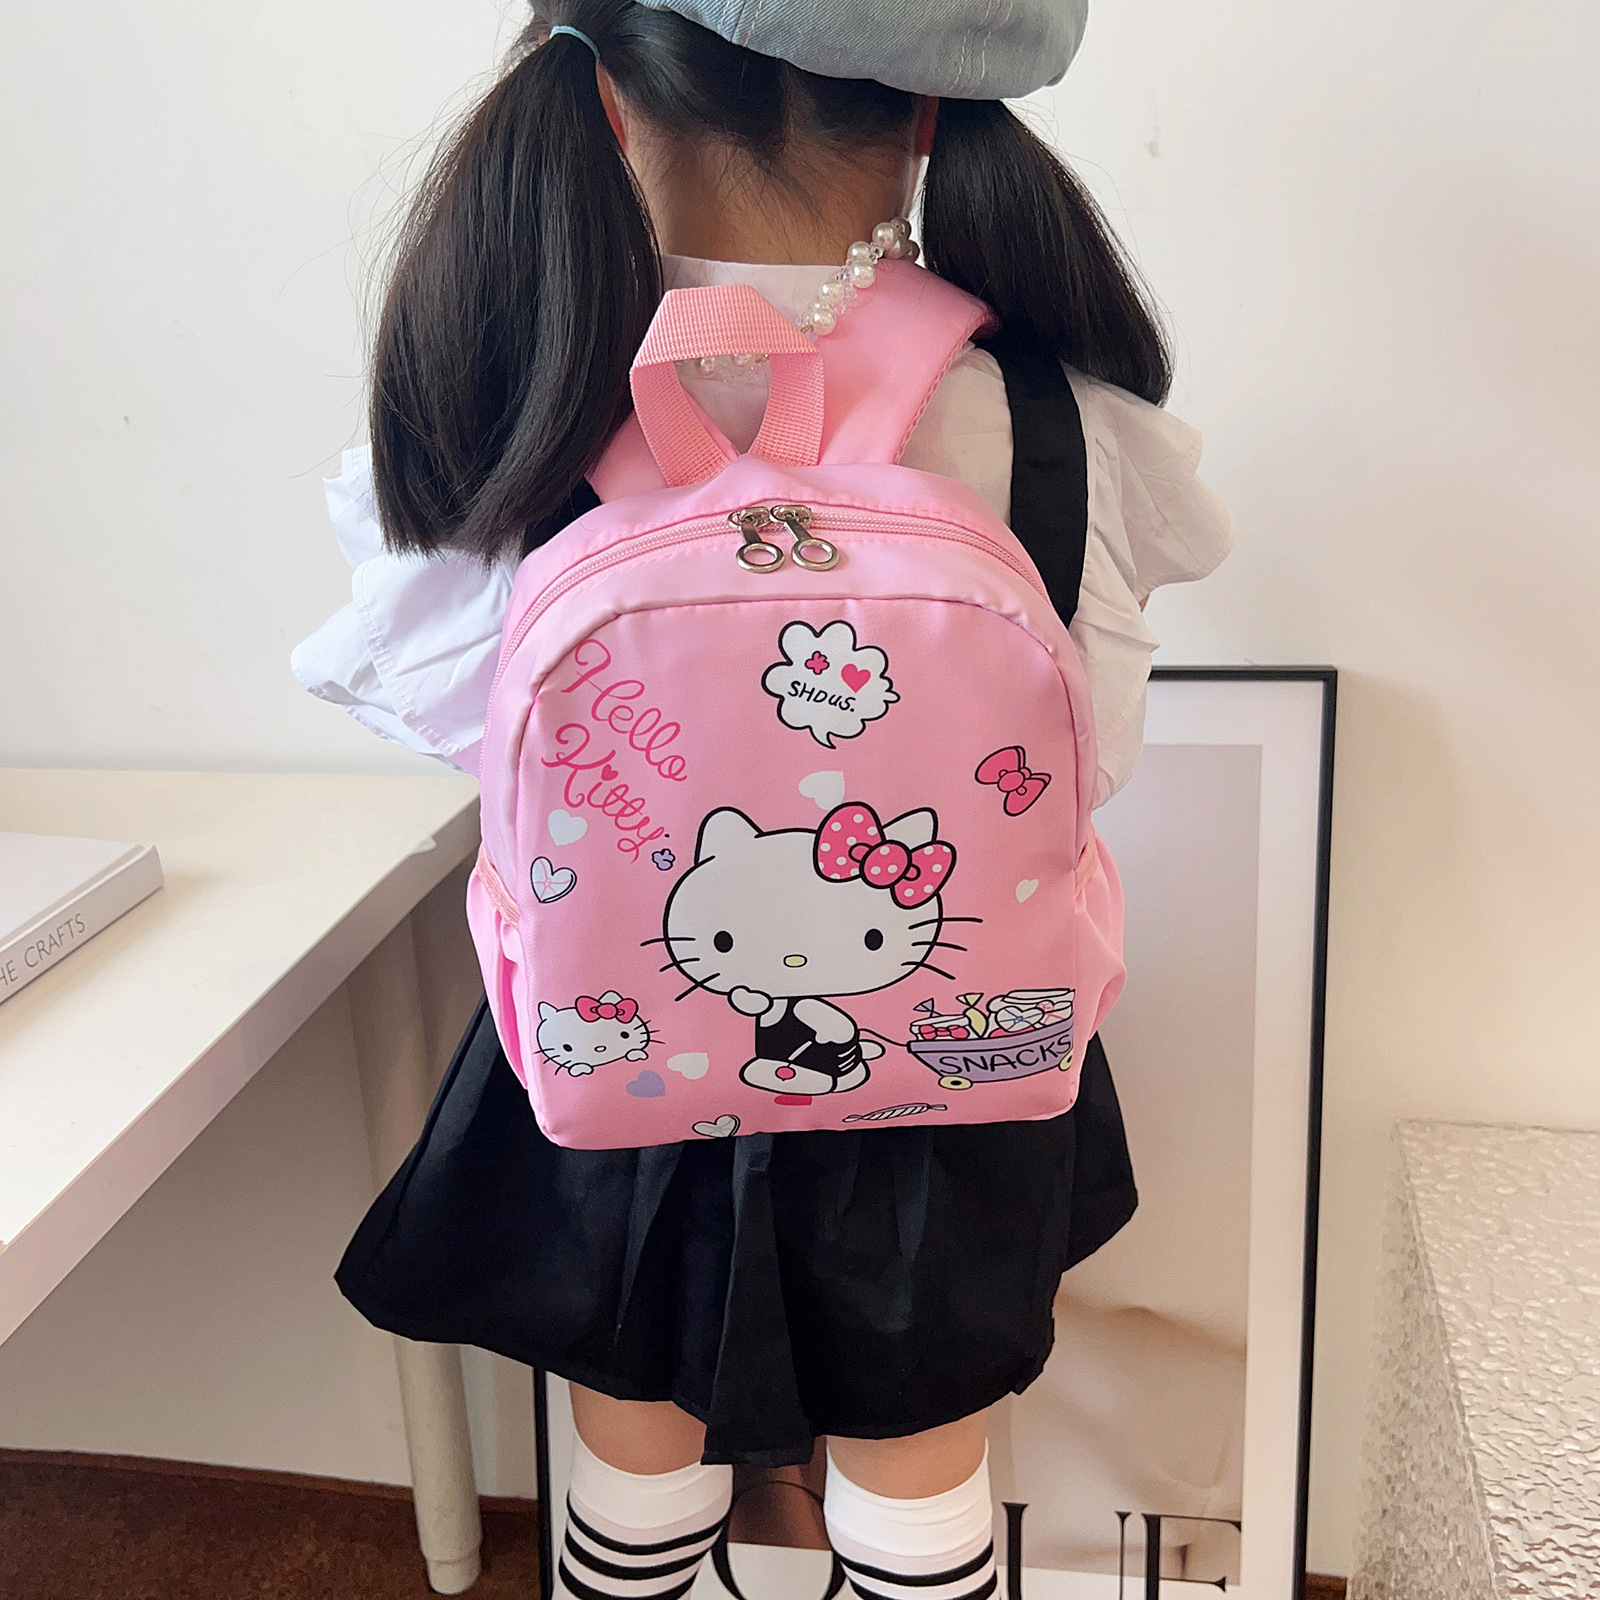 Foreign Trade New Kindergarten Backpack Cute Girl Simple Cartoon Children's Schoolbag 1-6 Years Old Baby's Backpack